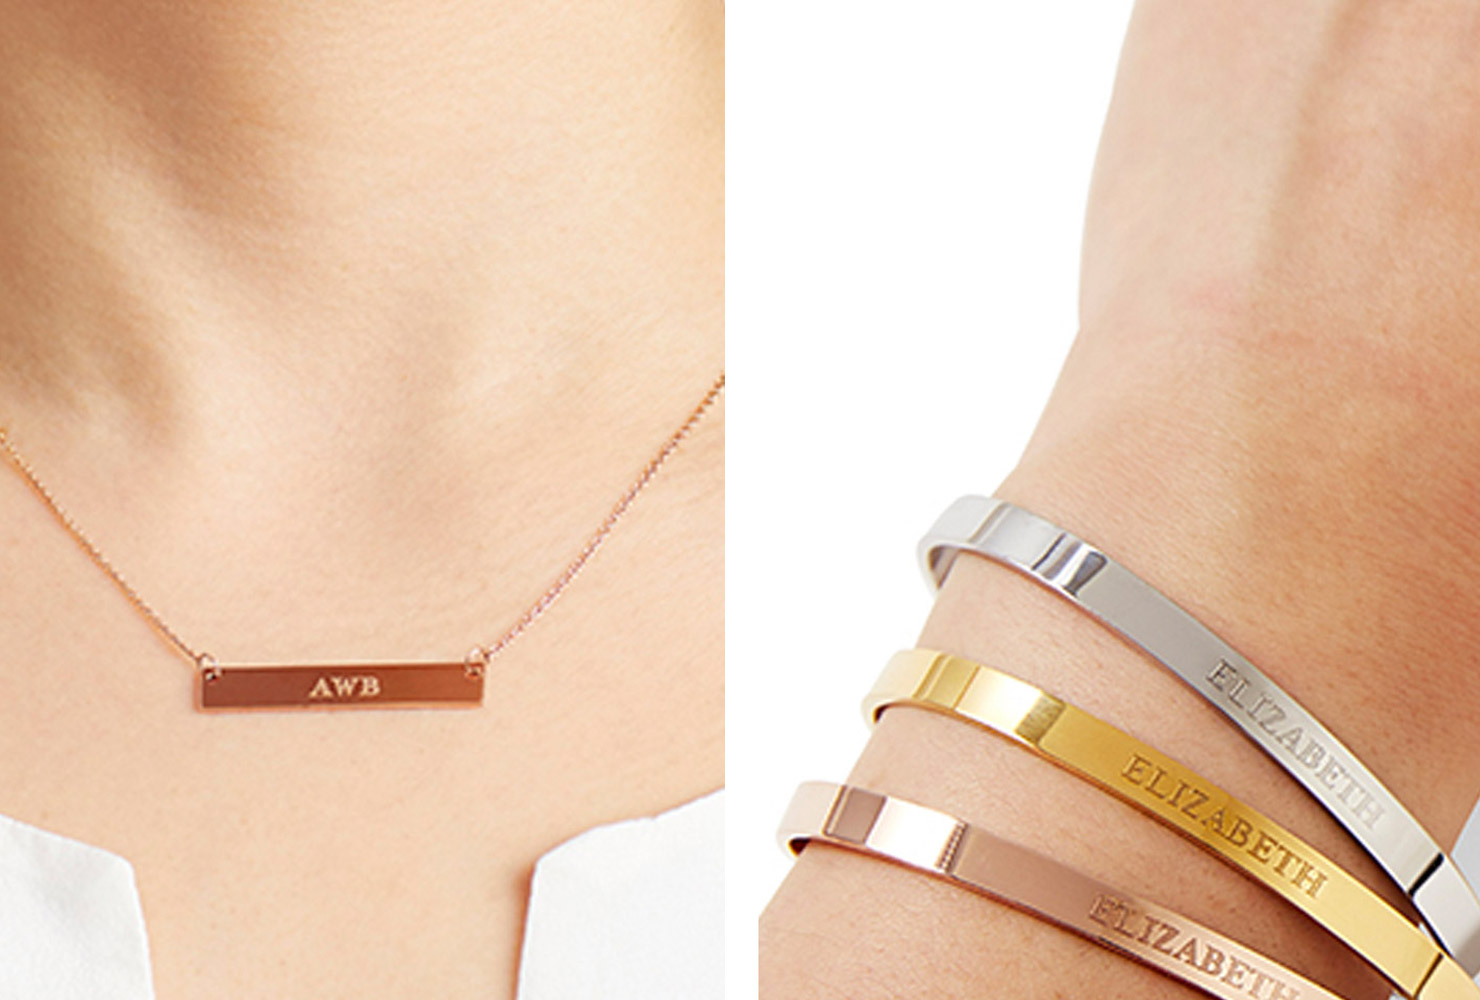 Monogrammed bracelets and necklace.